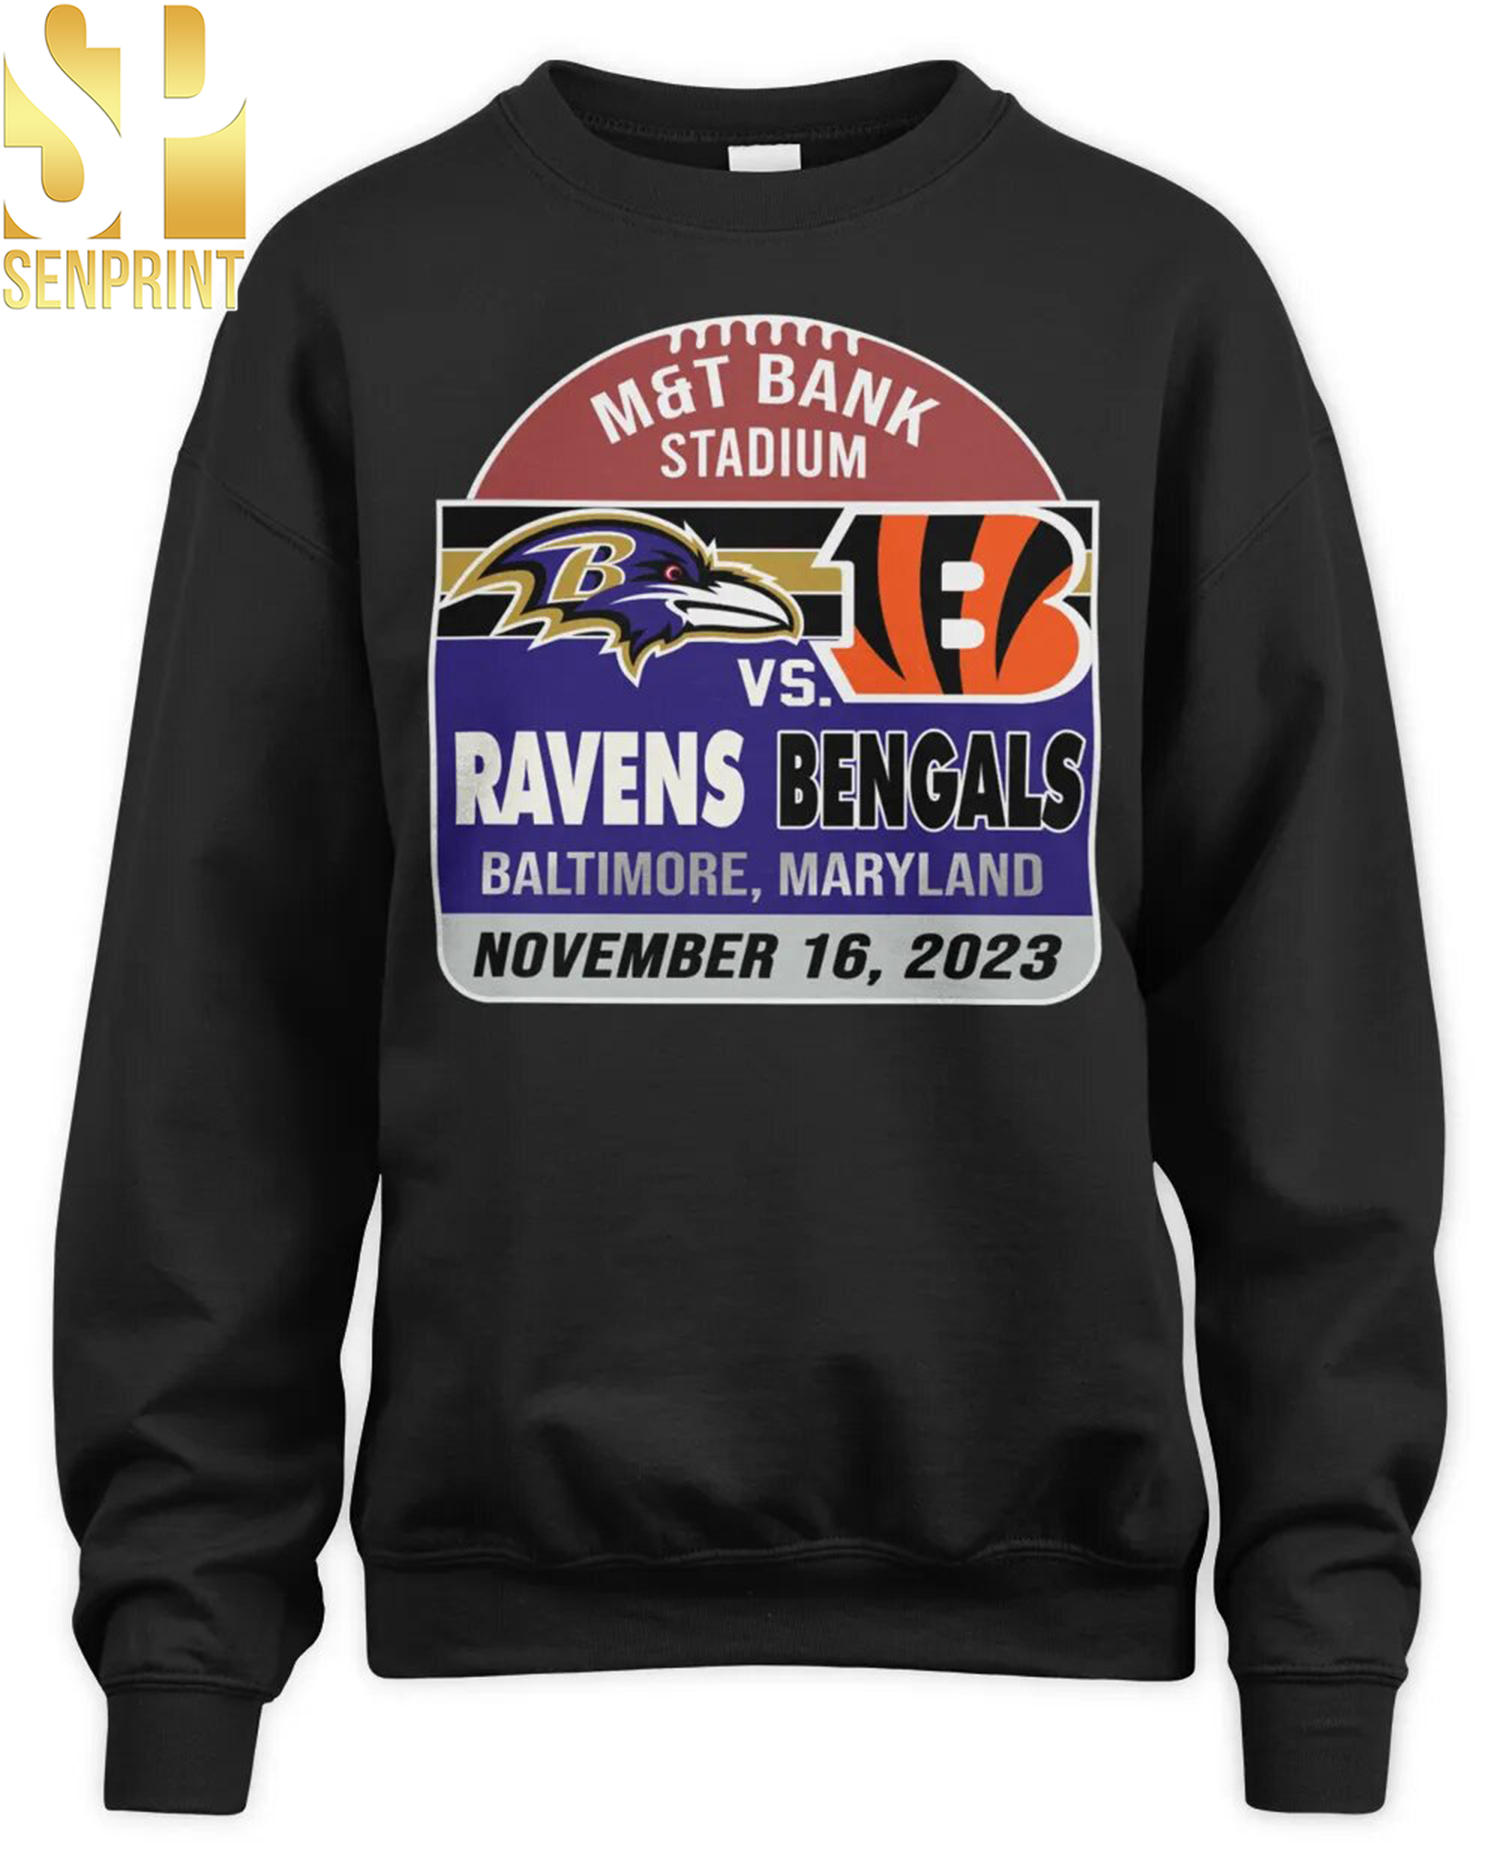 NFL Cincinnati Bengals vs Baltimore Ravens Thursday Night Football Week 11 2023 Shirt